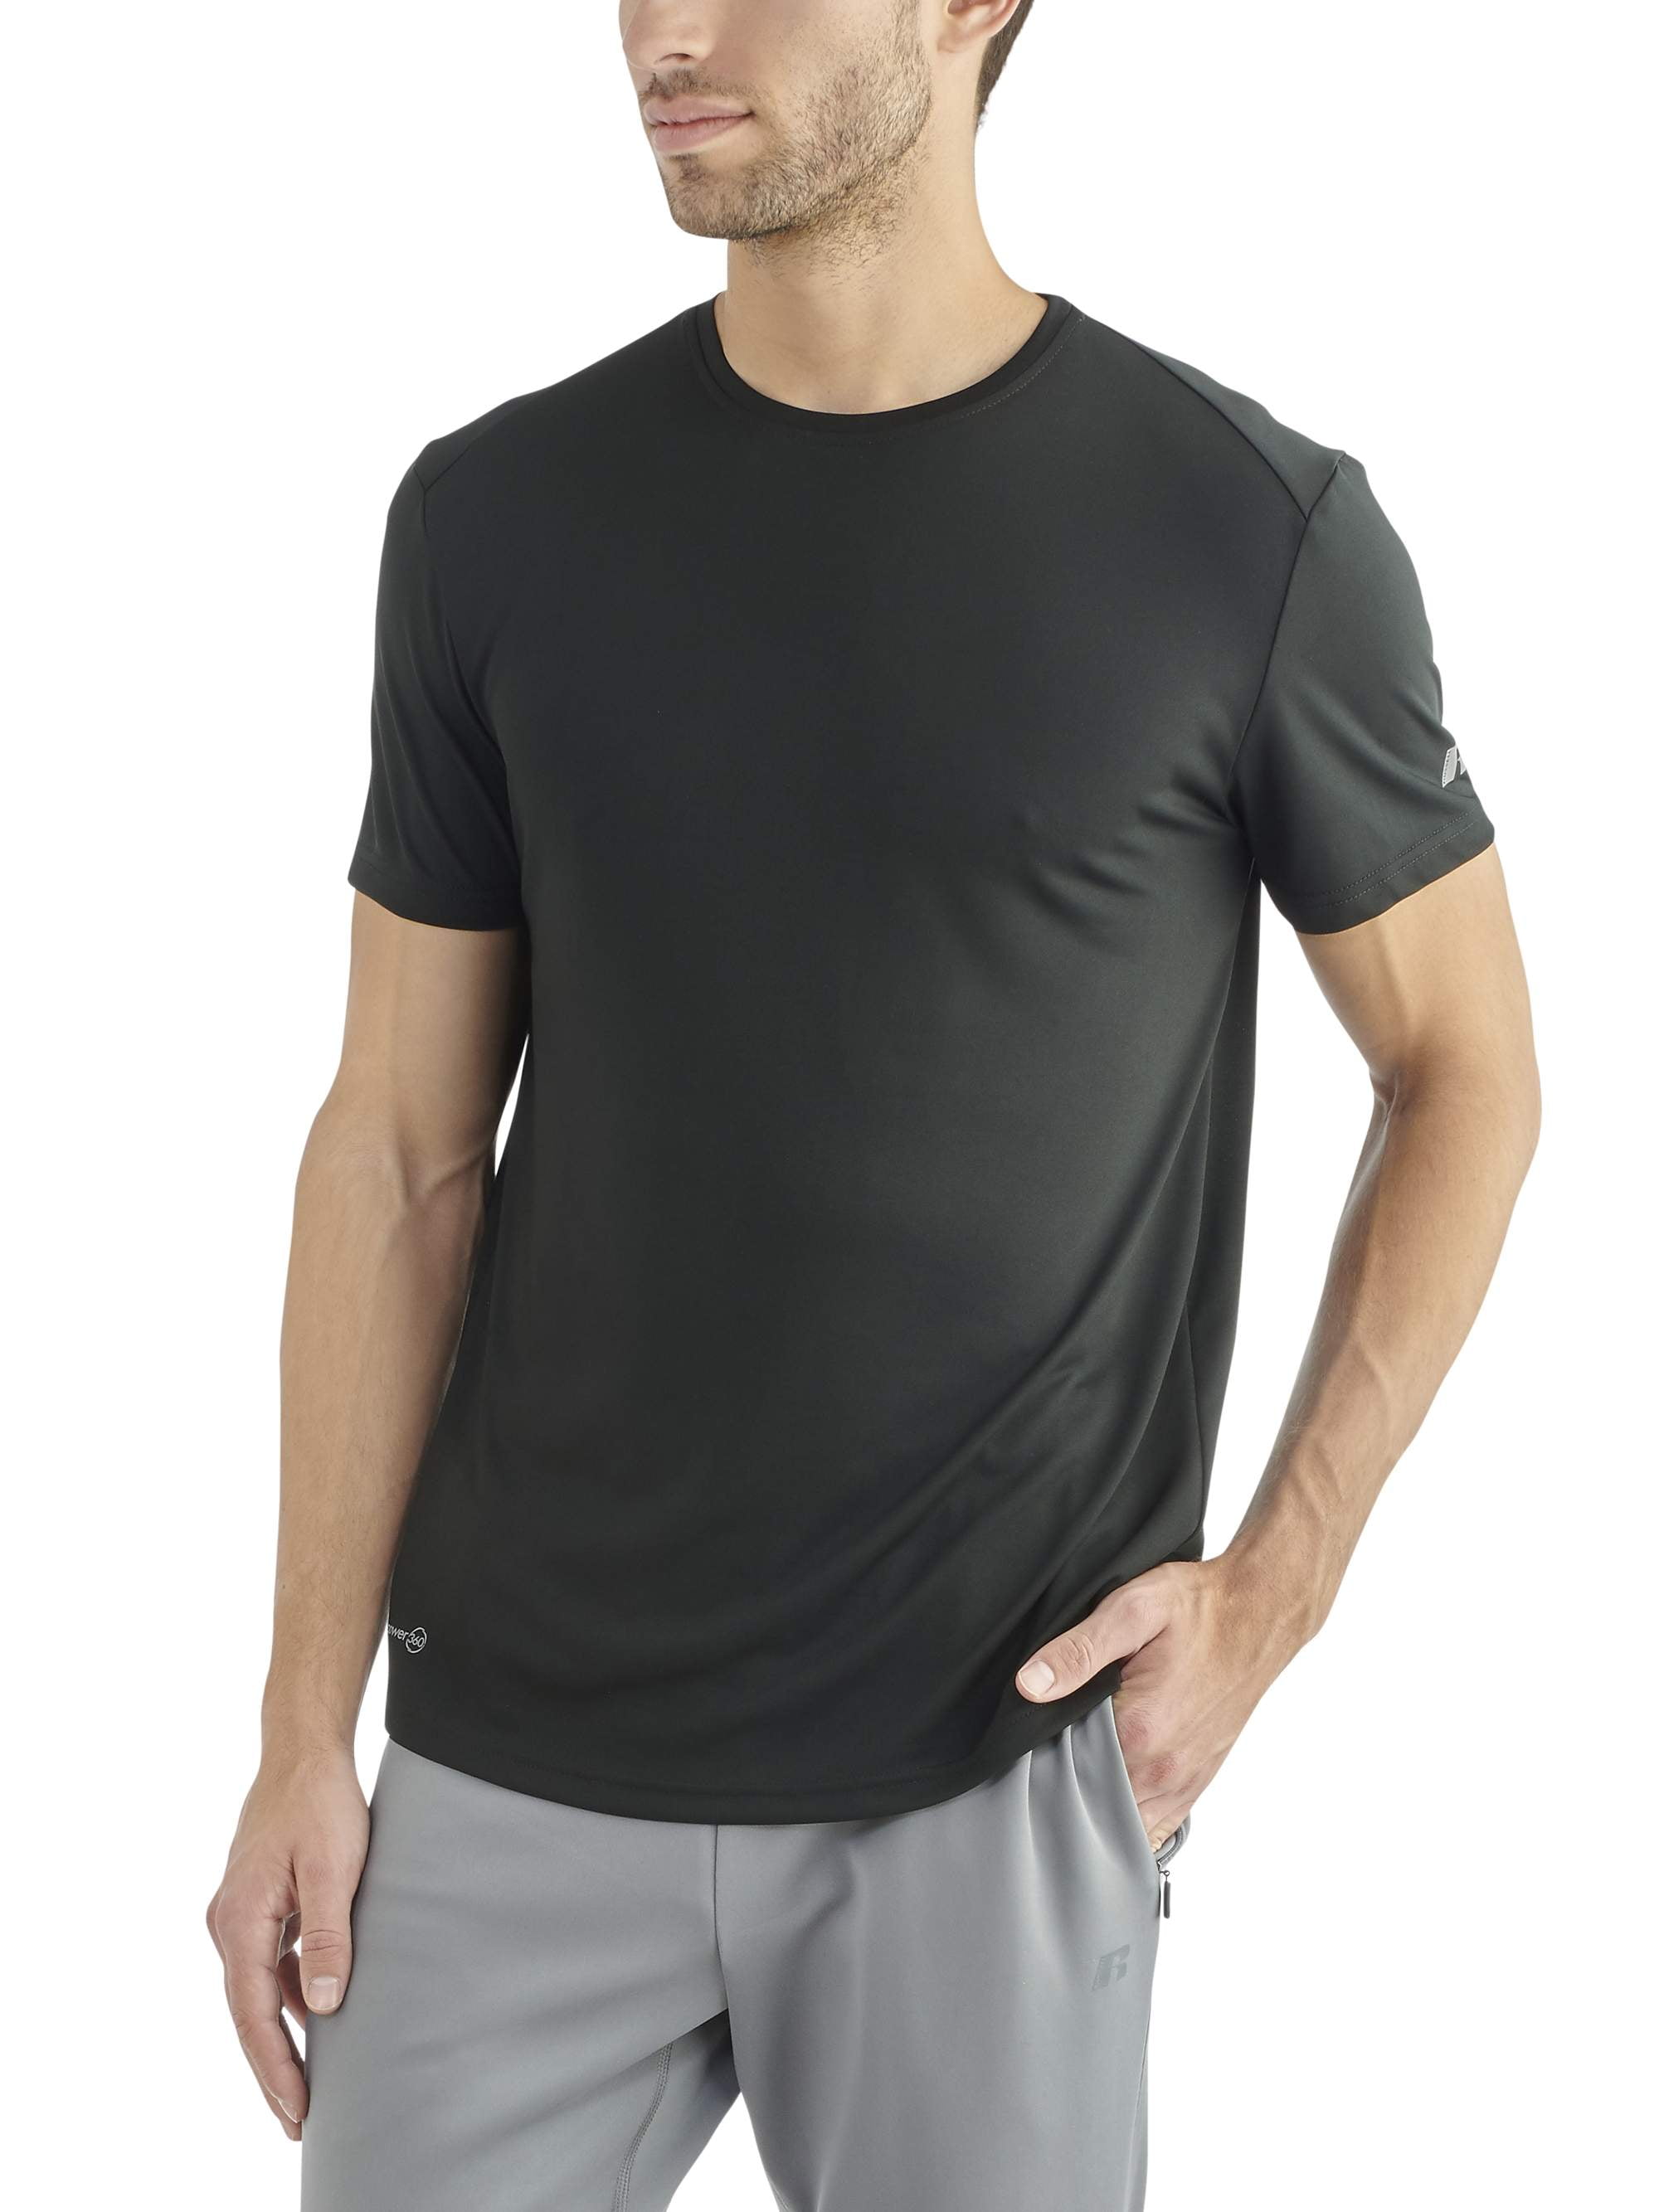 Russell Big & Tall T Shirts for Men Active Moisture Technology